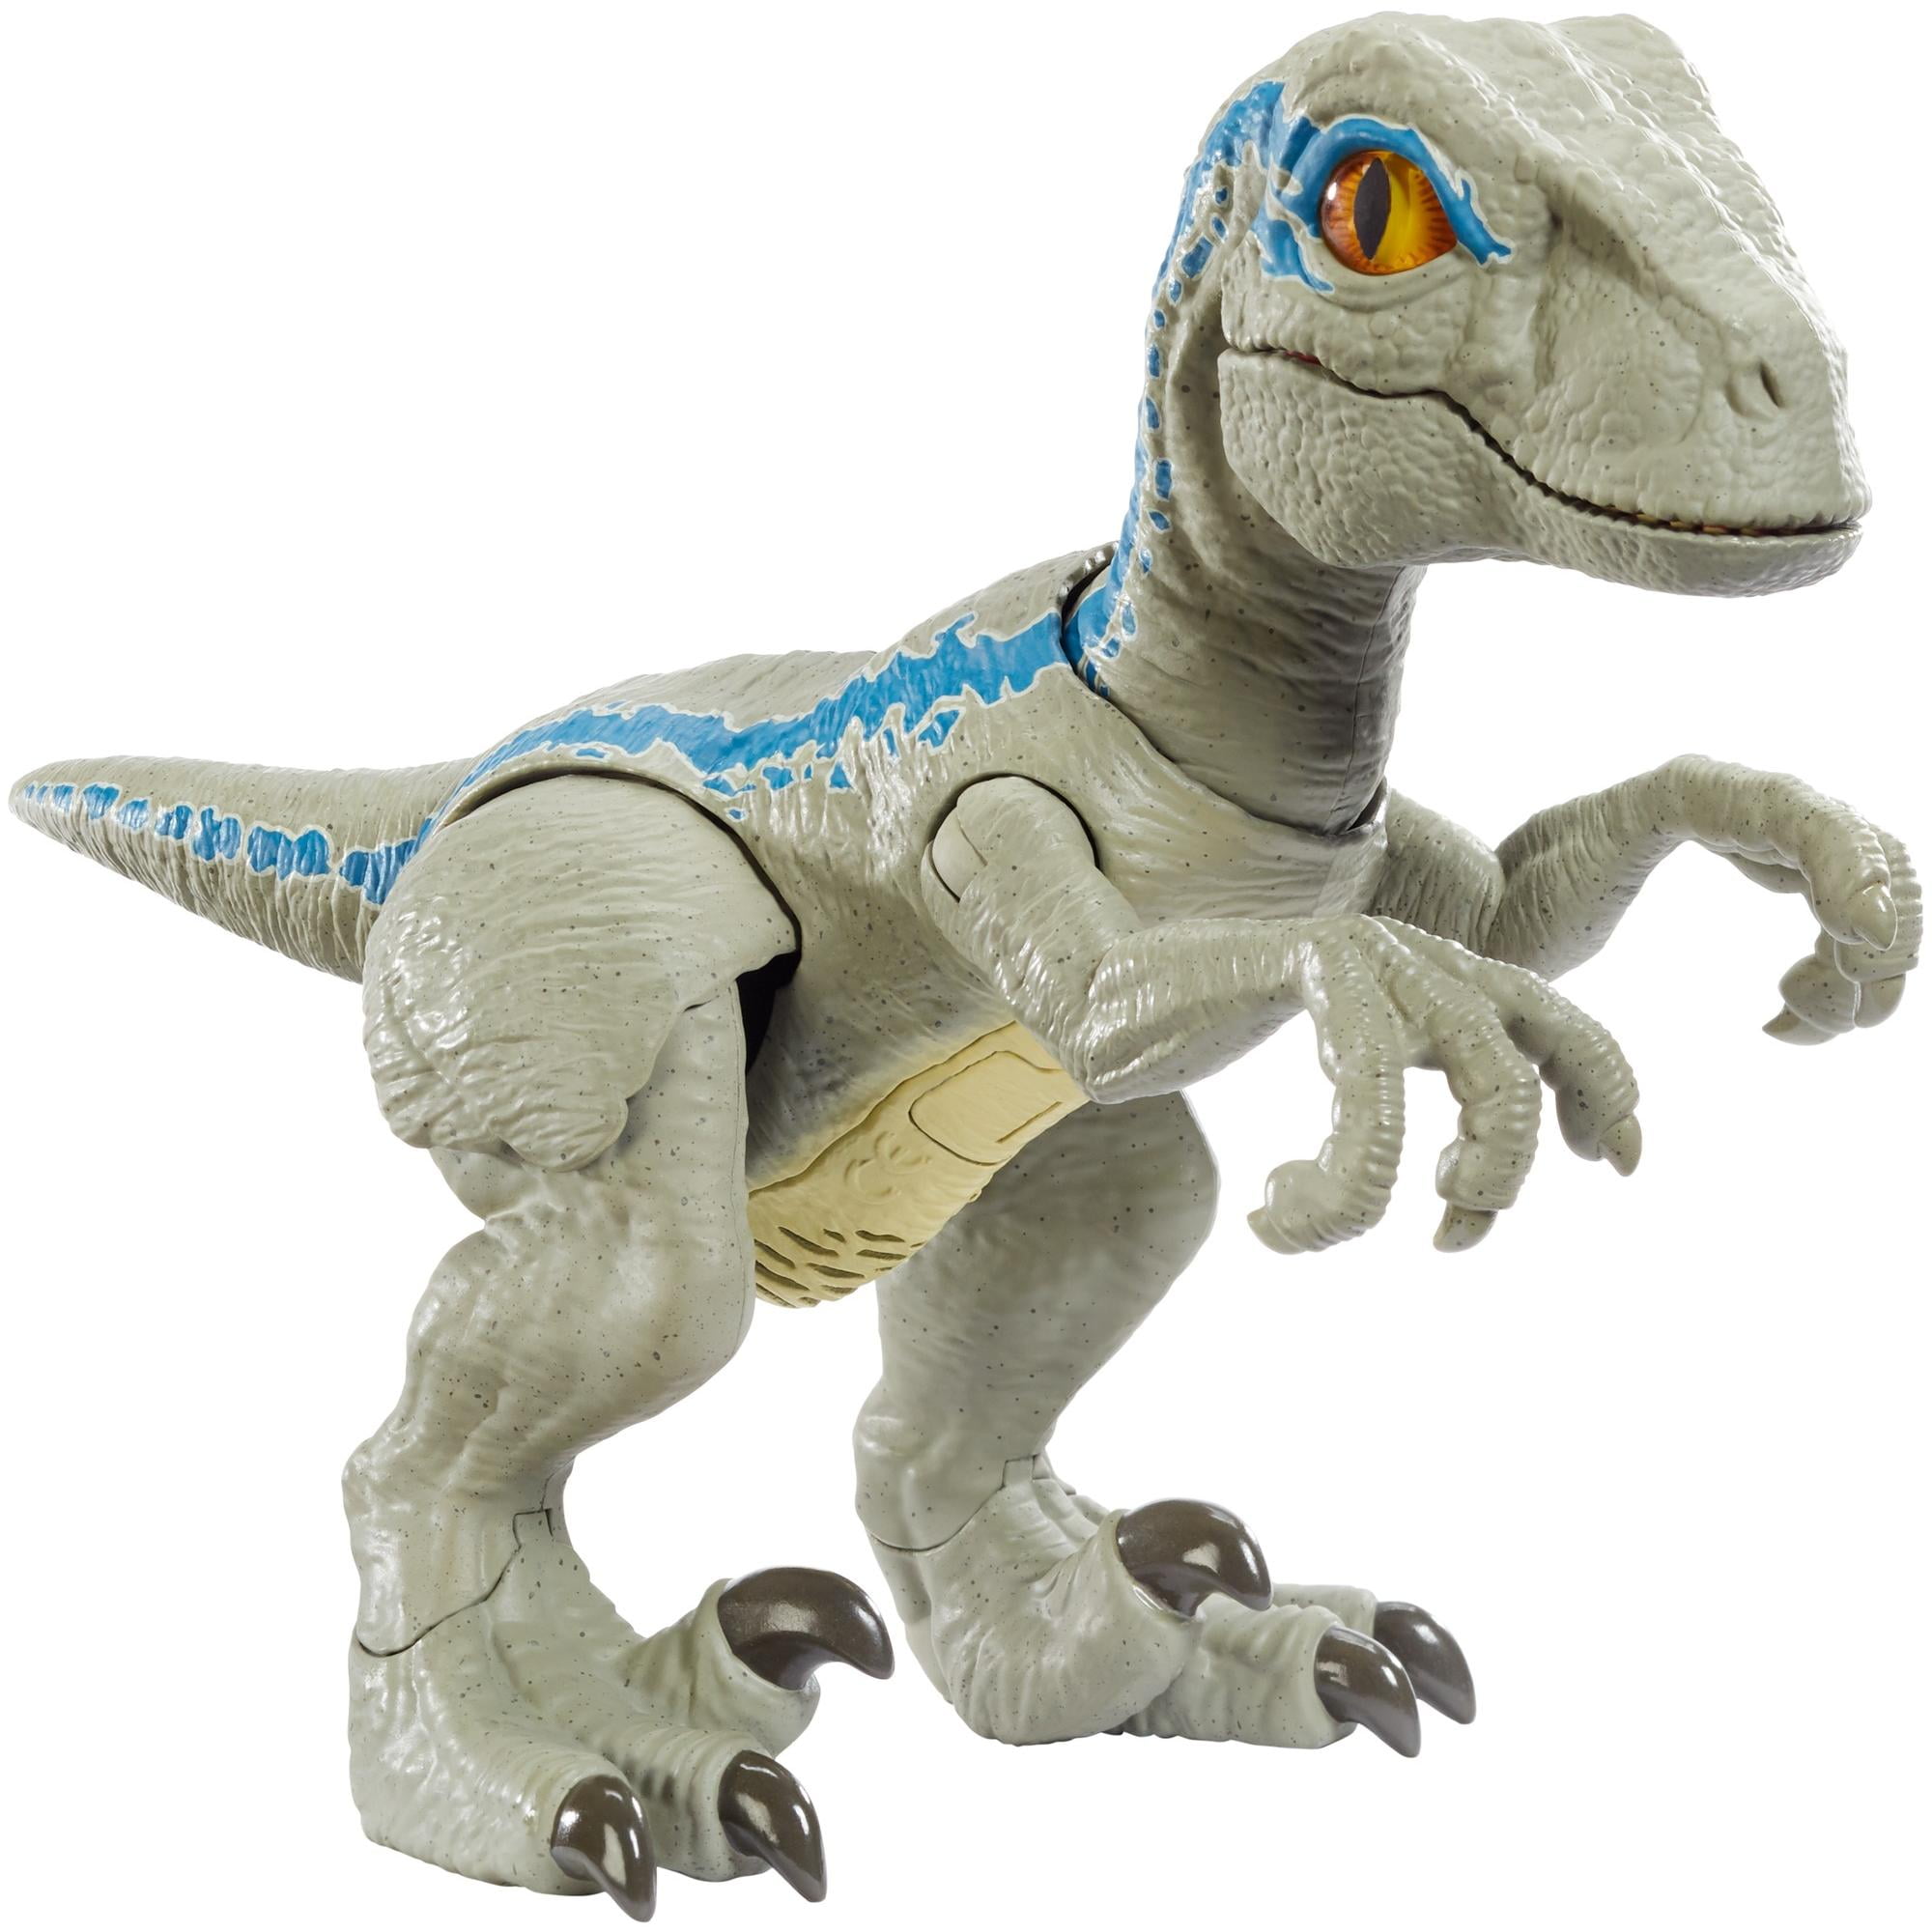 Jurassic World Velociraptor Blue Action Figure Dinosaur Toy Mattel 7fgjzz1 for sale online 